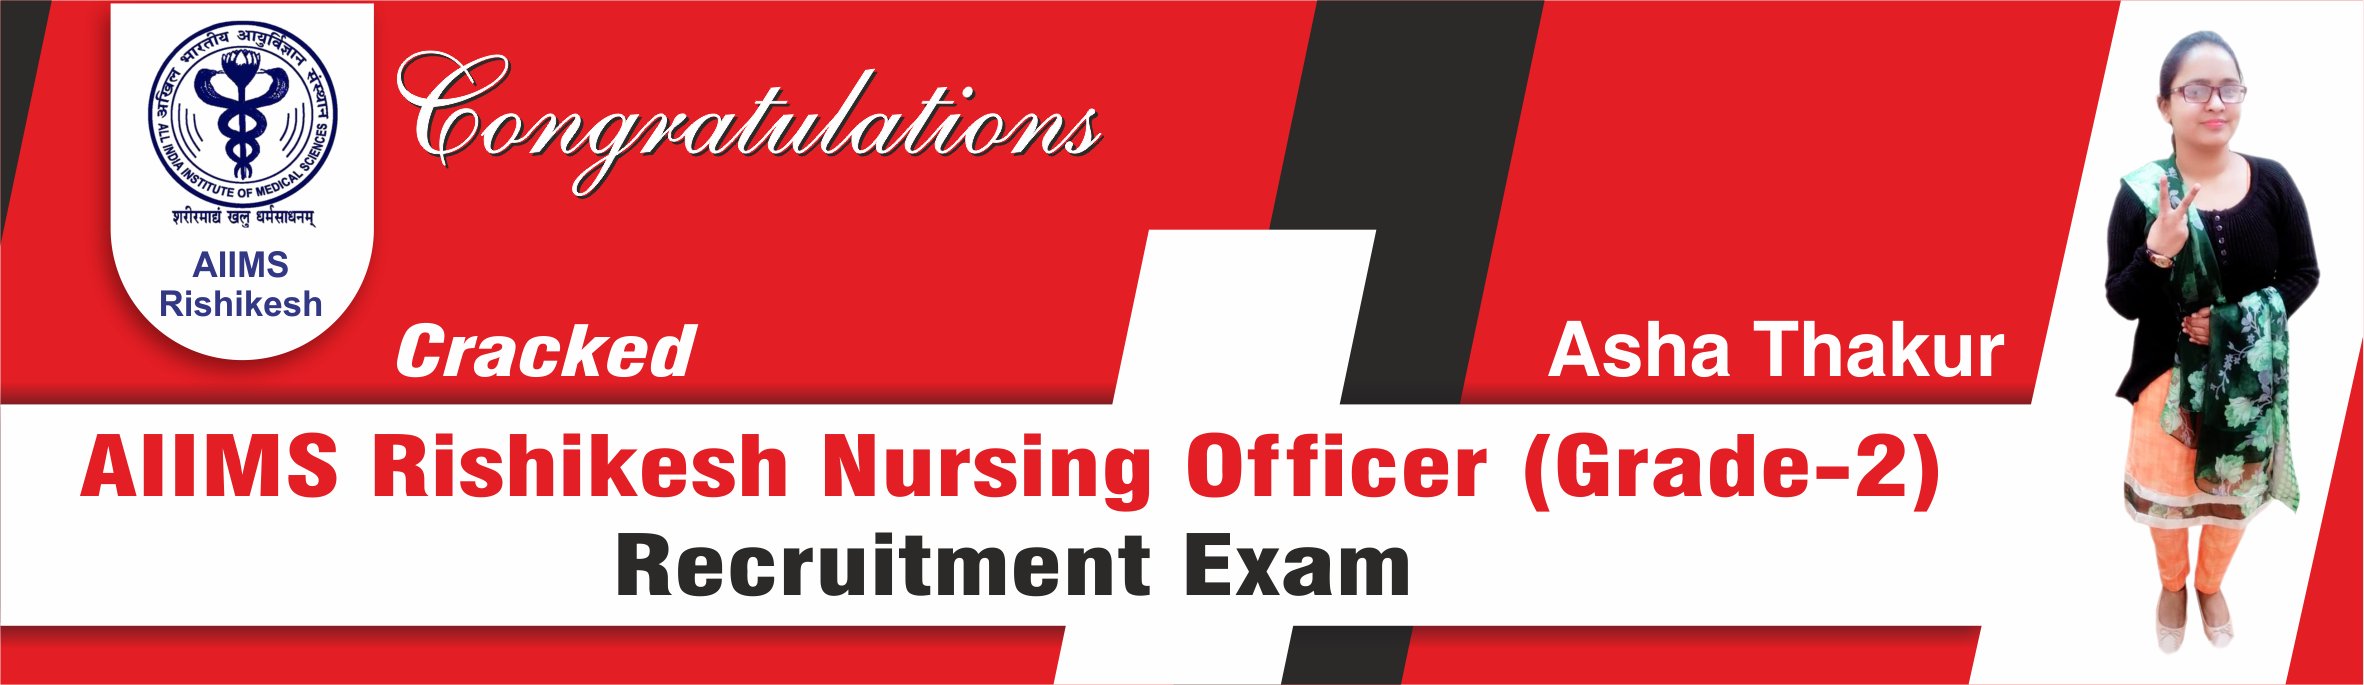 AIIMS Rishikesh Nursing Officer Recruitment Coaching